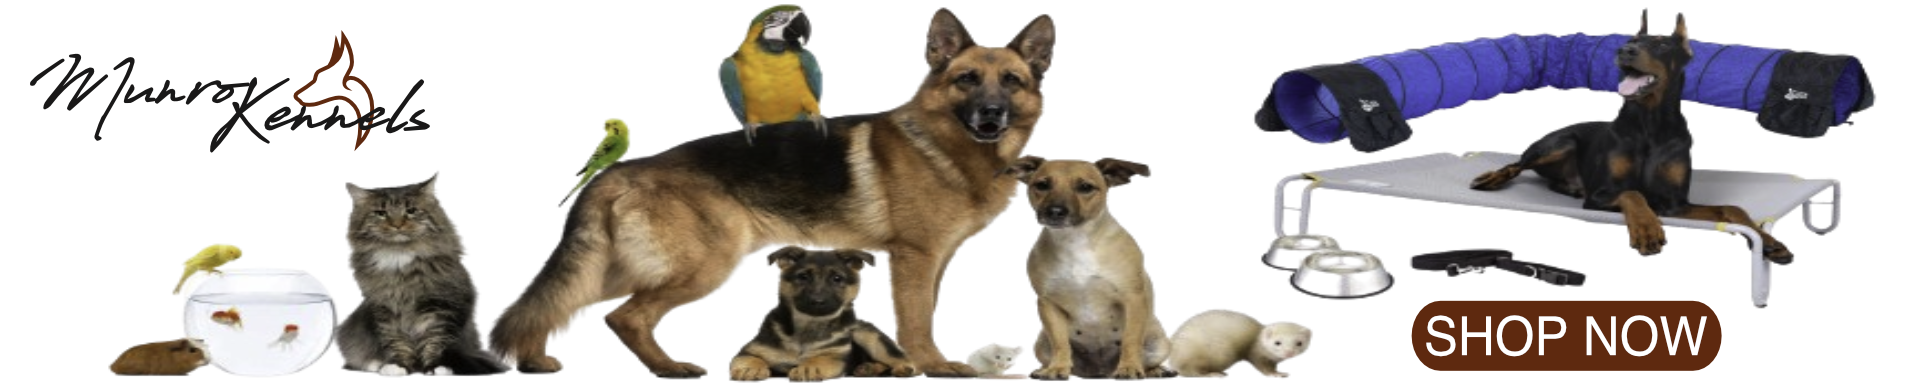 Animal Supplies & Pet Products | GarageAndFab.com | Munro Industries gf-100103051001